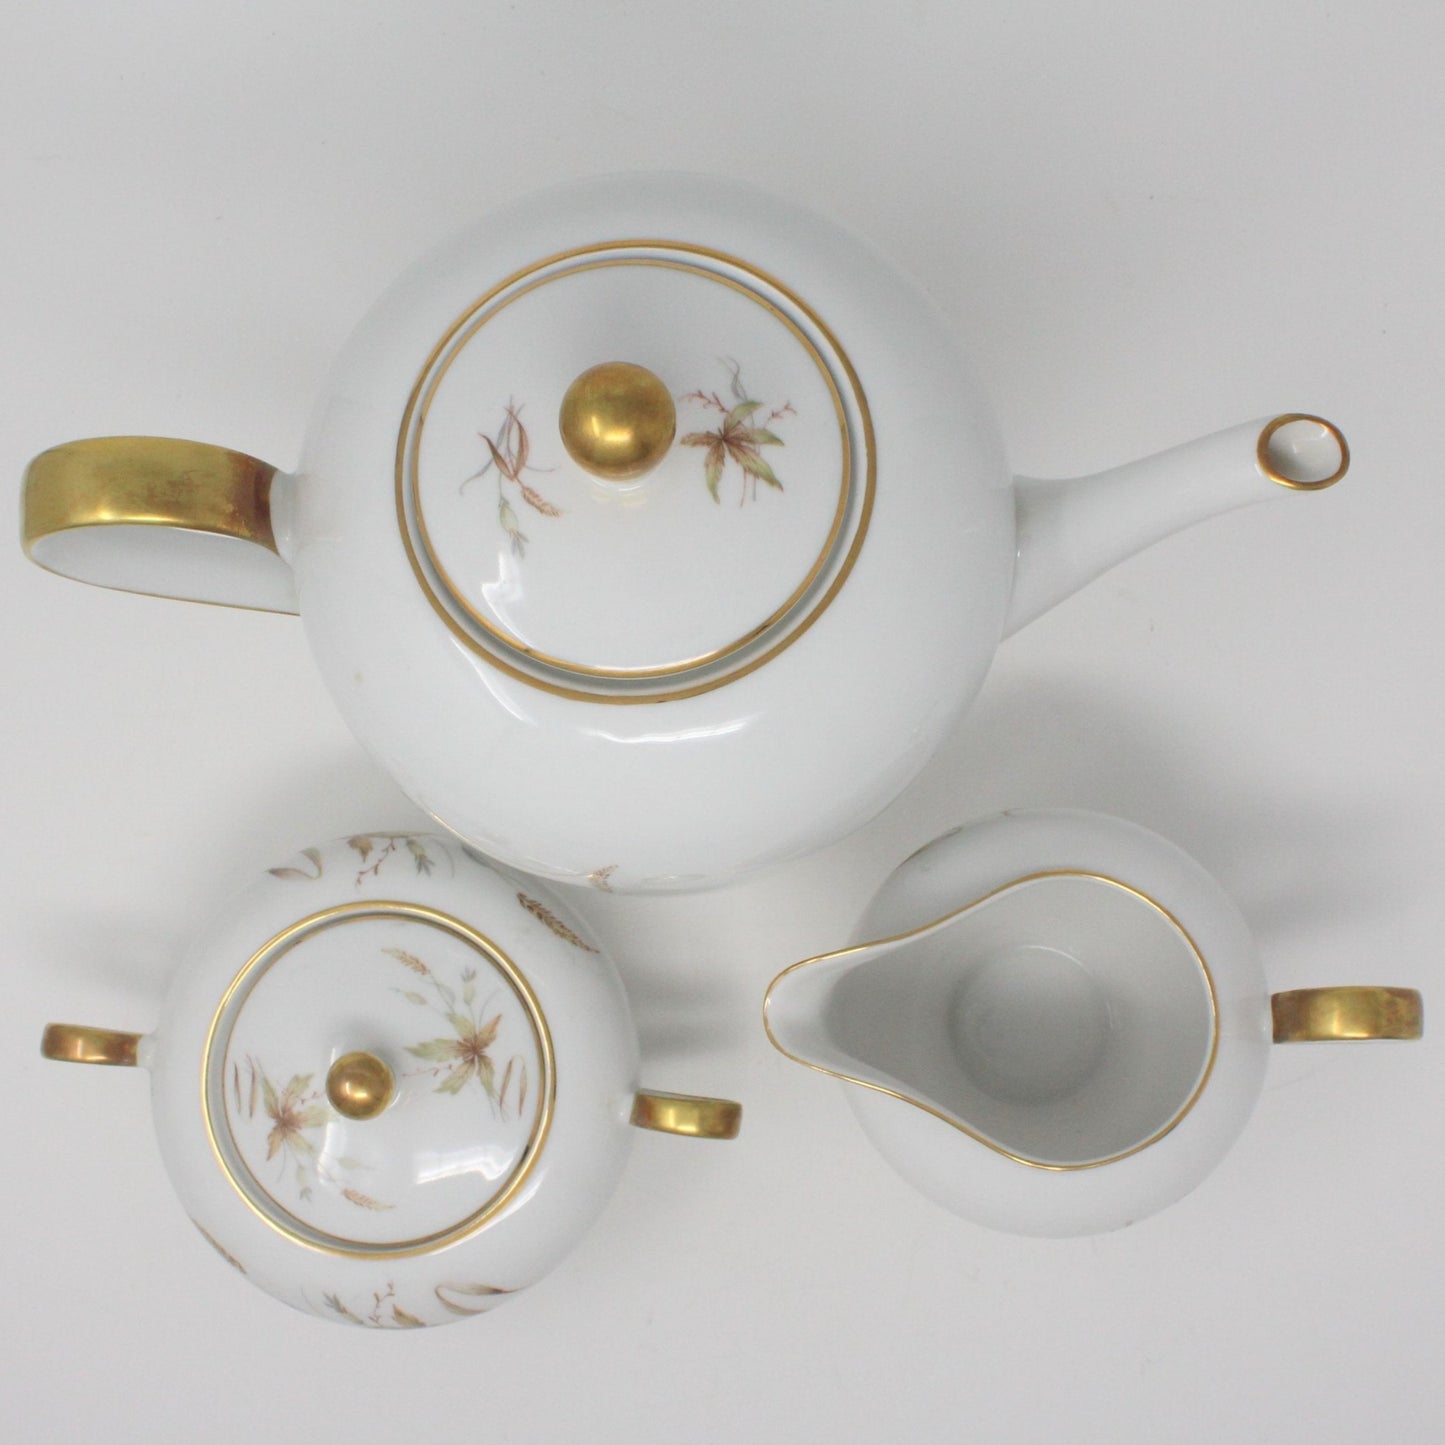 Coffee Set, Pot, Creamer & Sugar Bowl, Edelstein, Aurora, Bavaria Germany, Vintage, SOLD